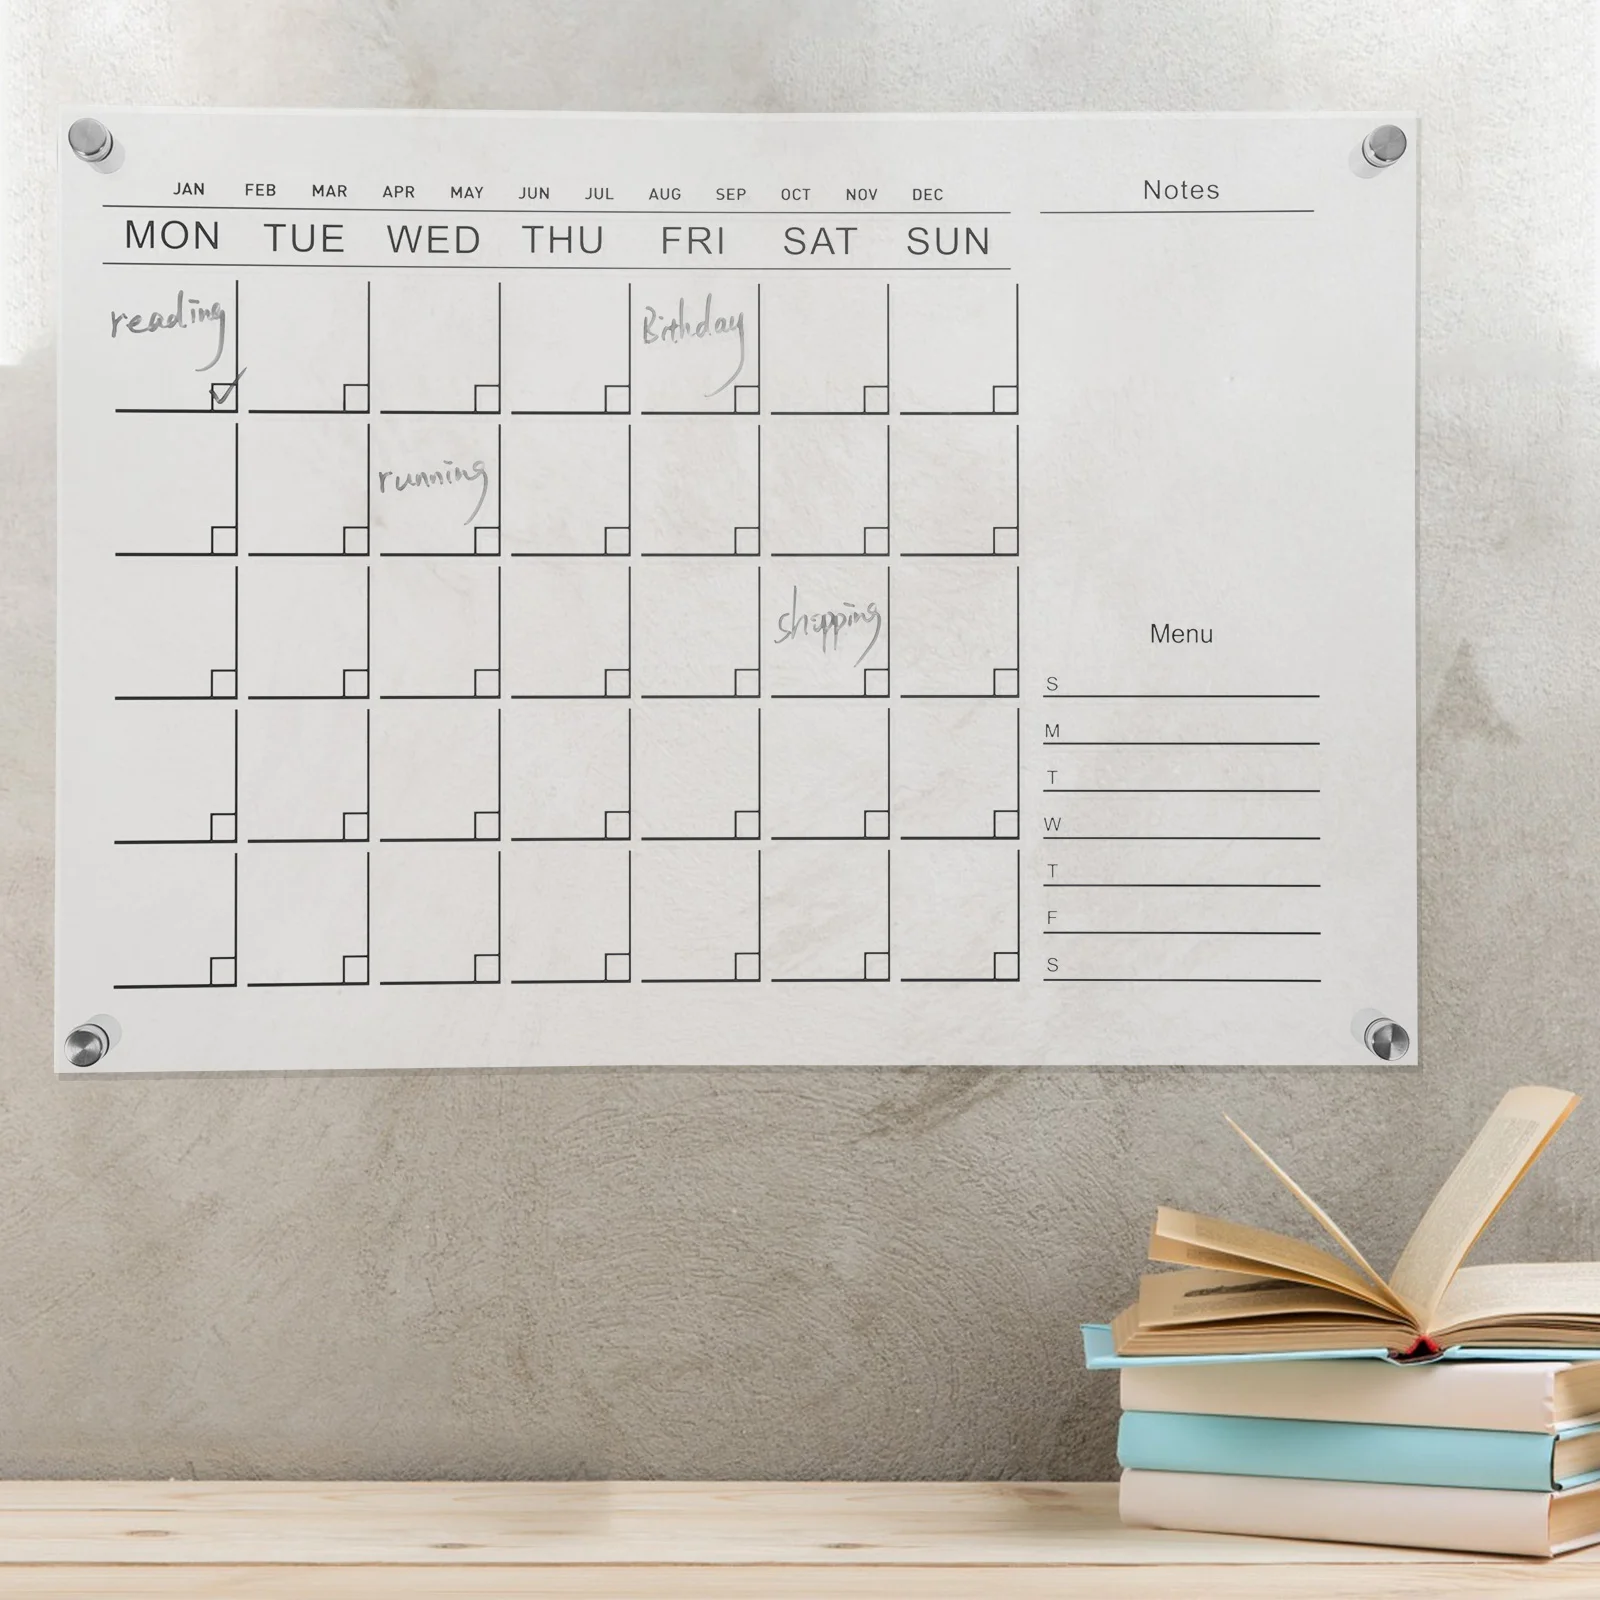 

Weekly Planner Board Acrylic Fridge Calendar Dry Erase Small Desktop Wall Whiteboards Household Clear Erasable Memo